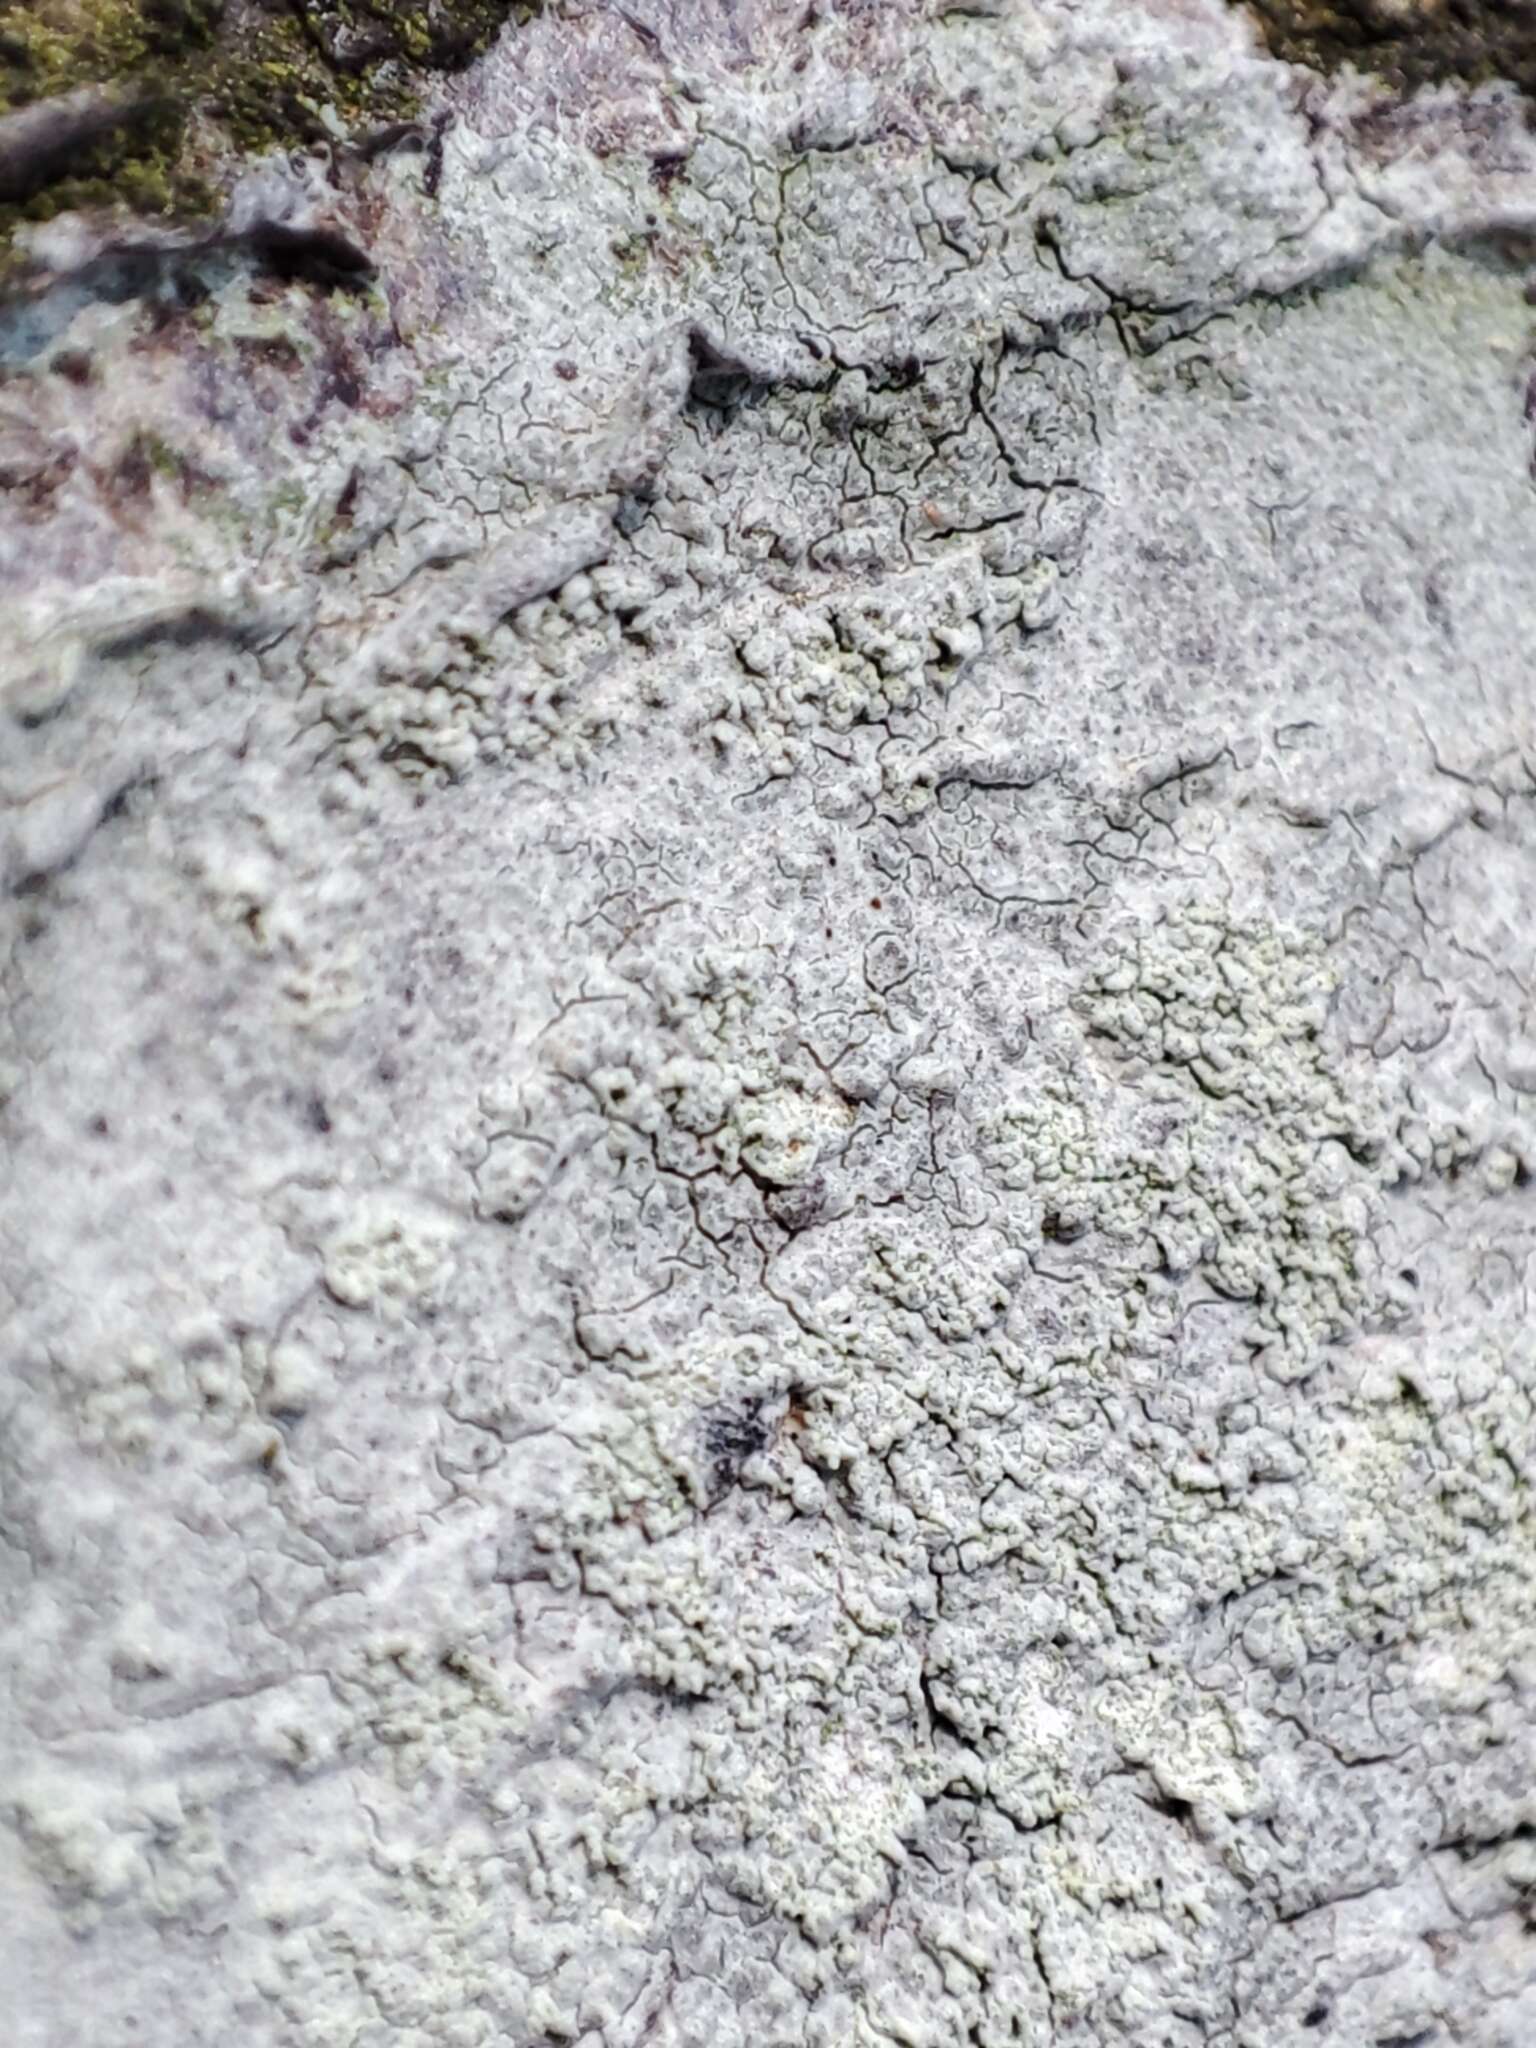 Image of blemished lichen